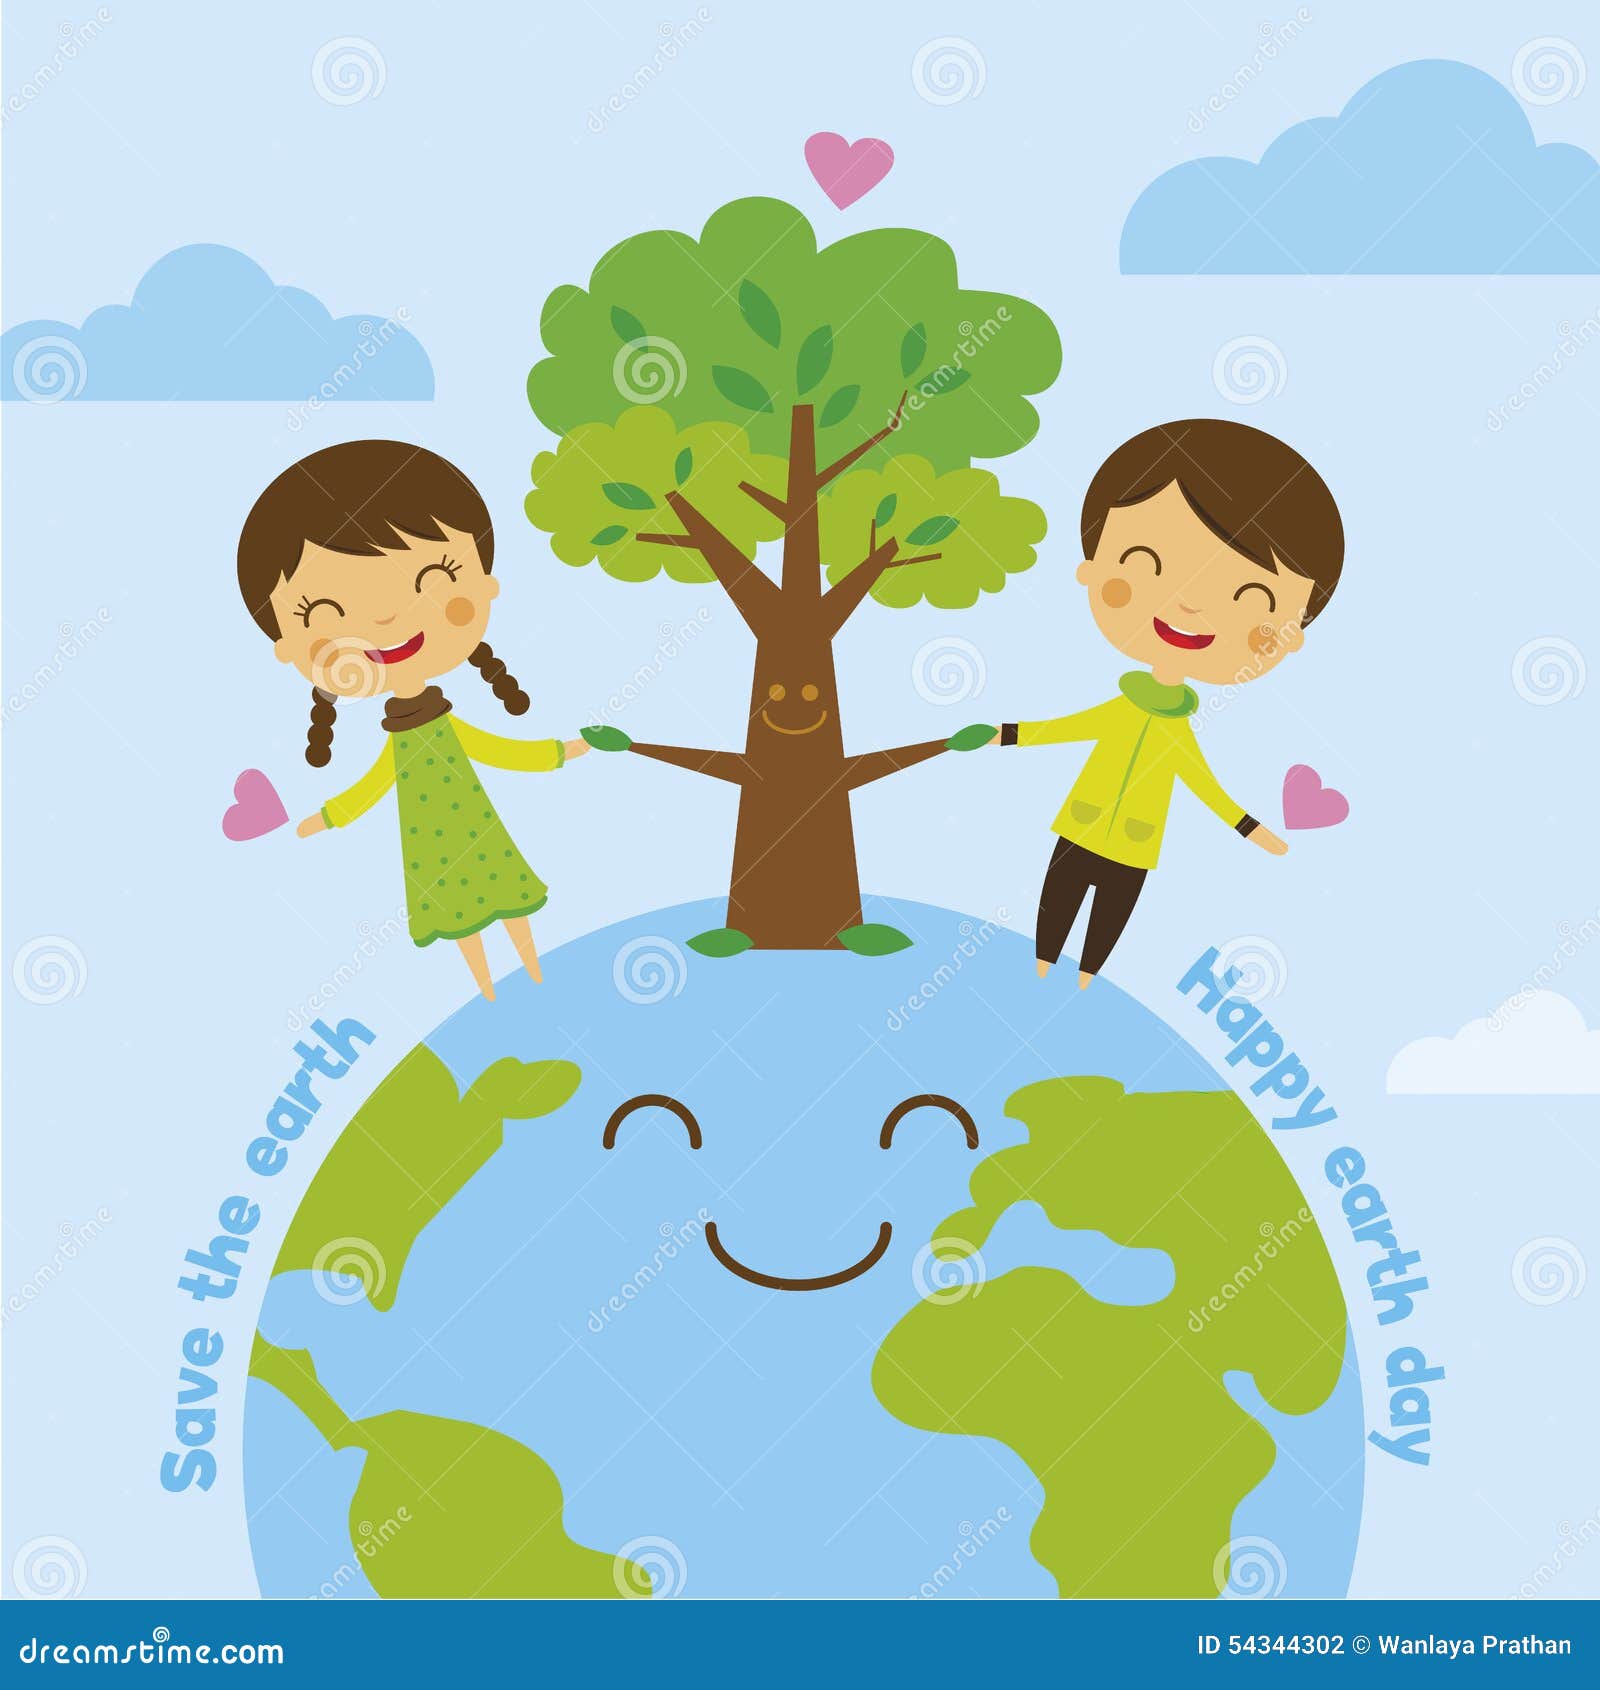 Save The Earth, Save World Illustration 54344302 - Megapixl